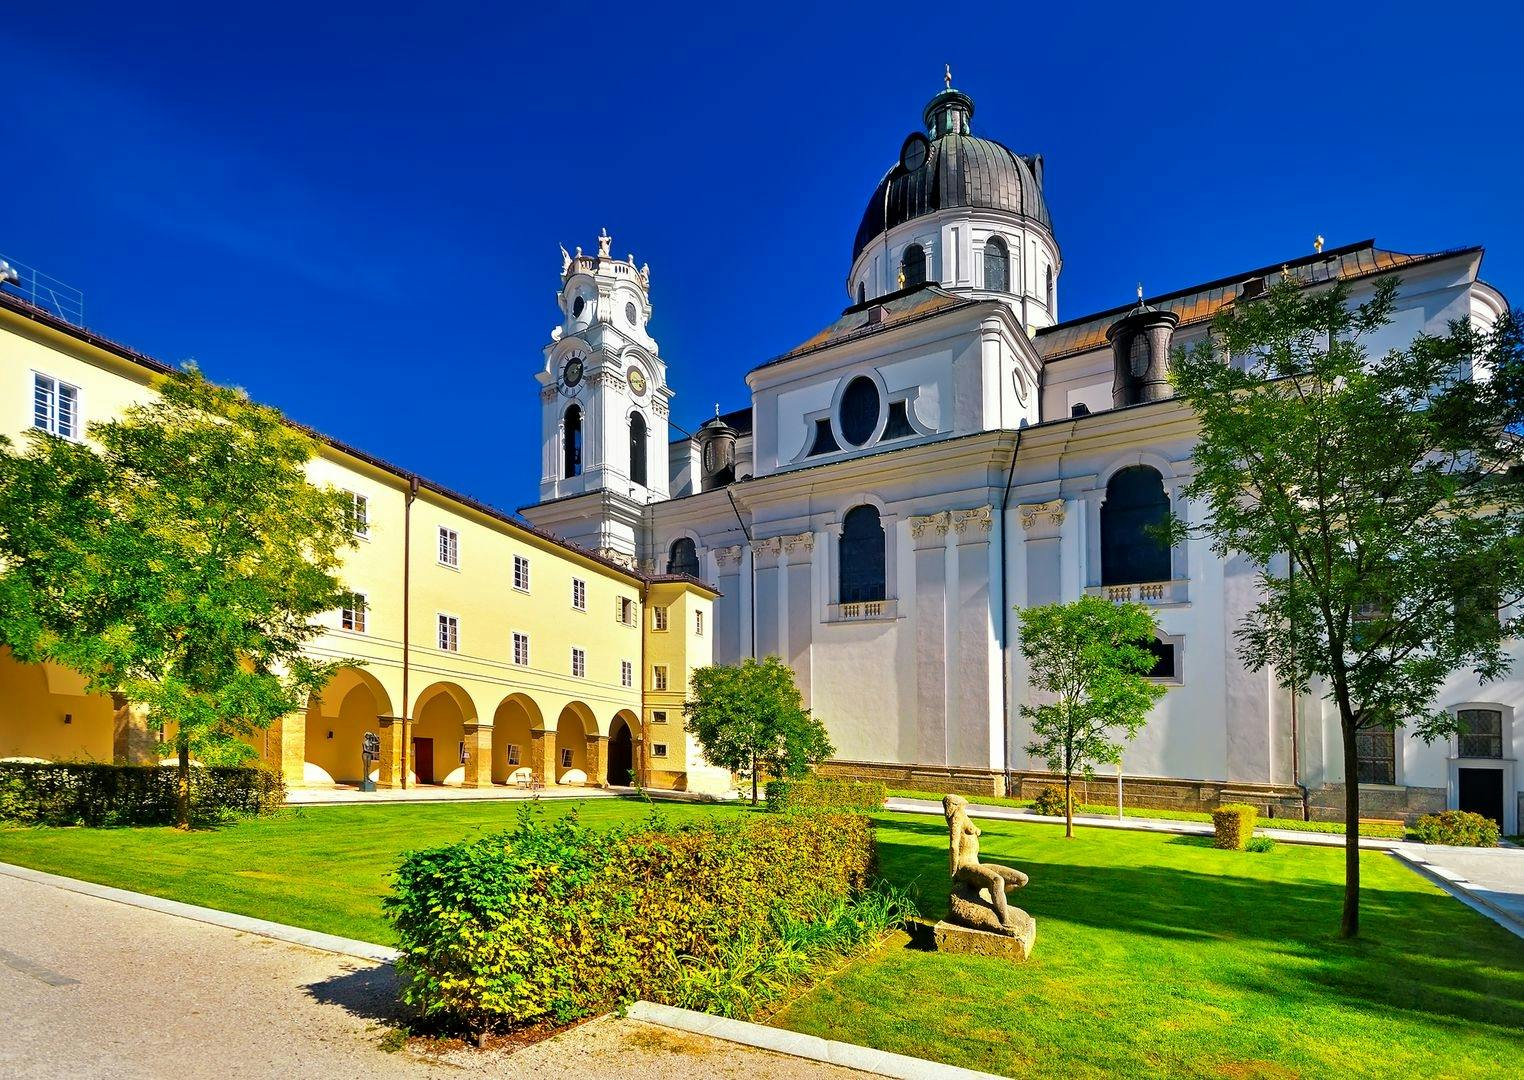 Salzburg historic walk through the Old Town in-app audio tour